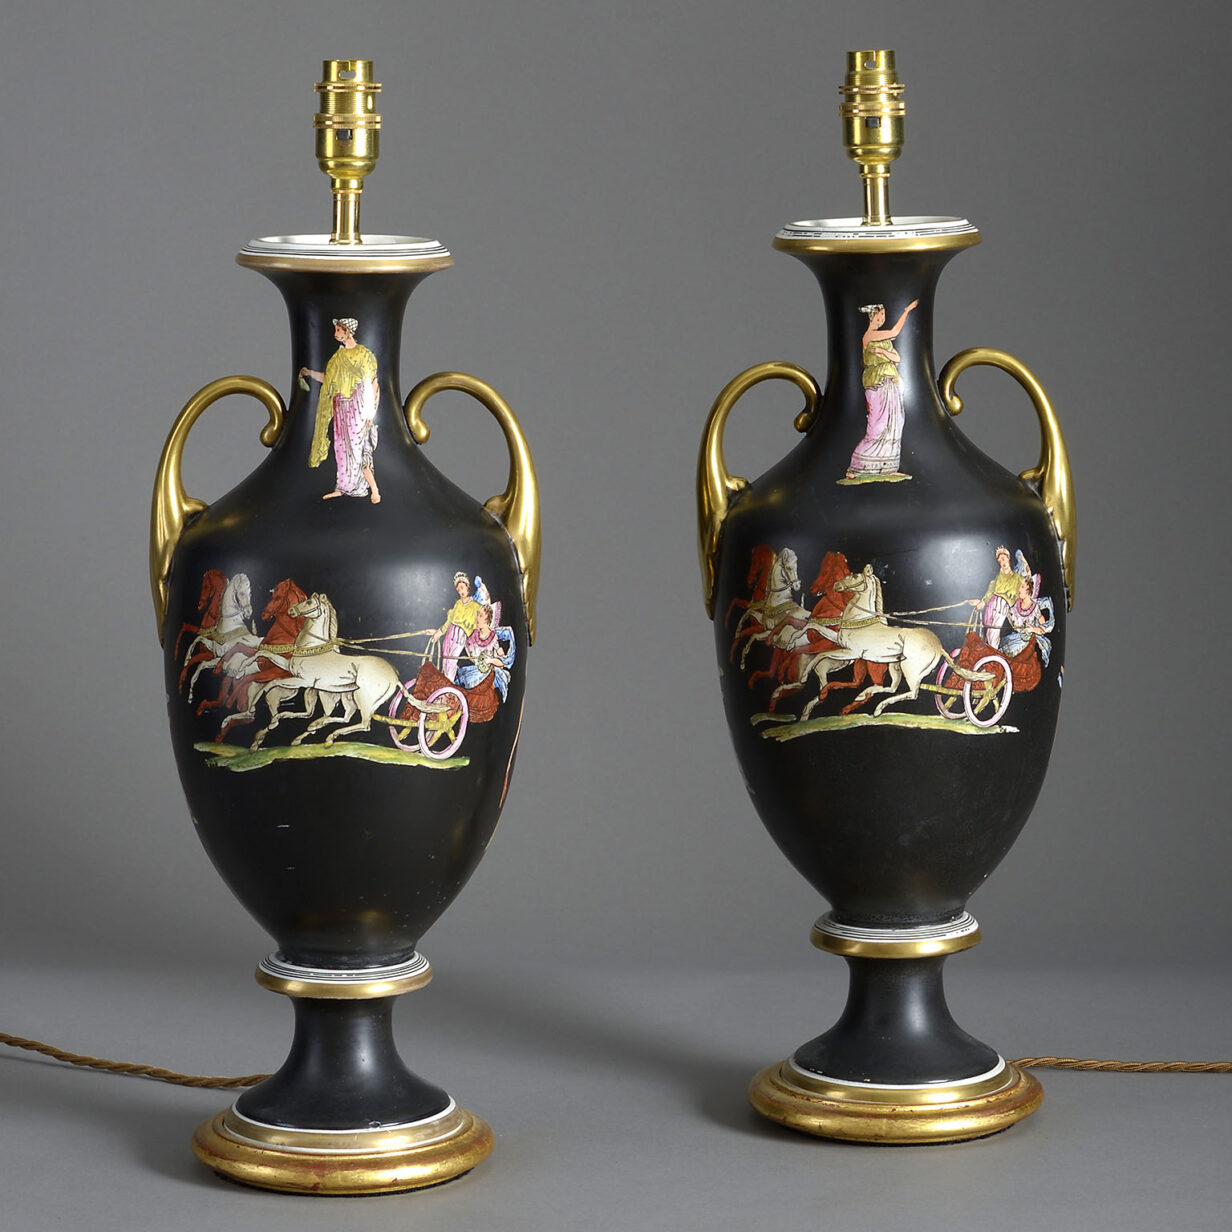 Pair of classical vase lamps